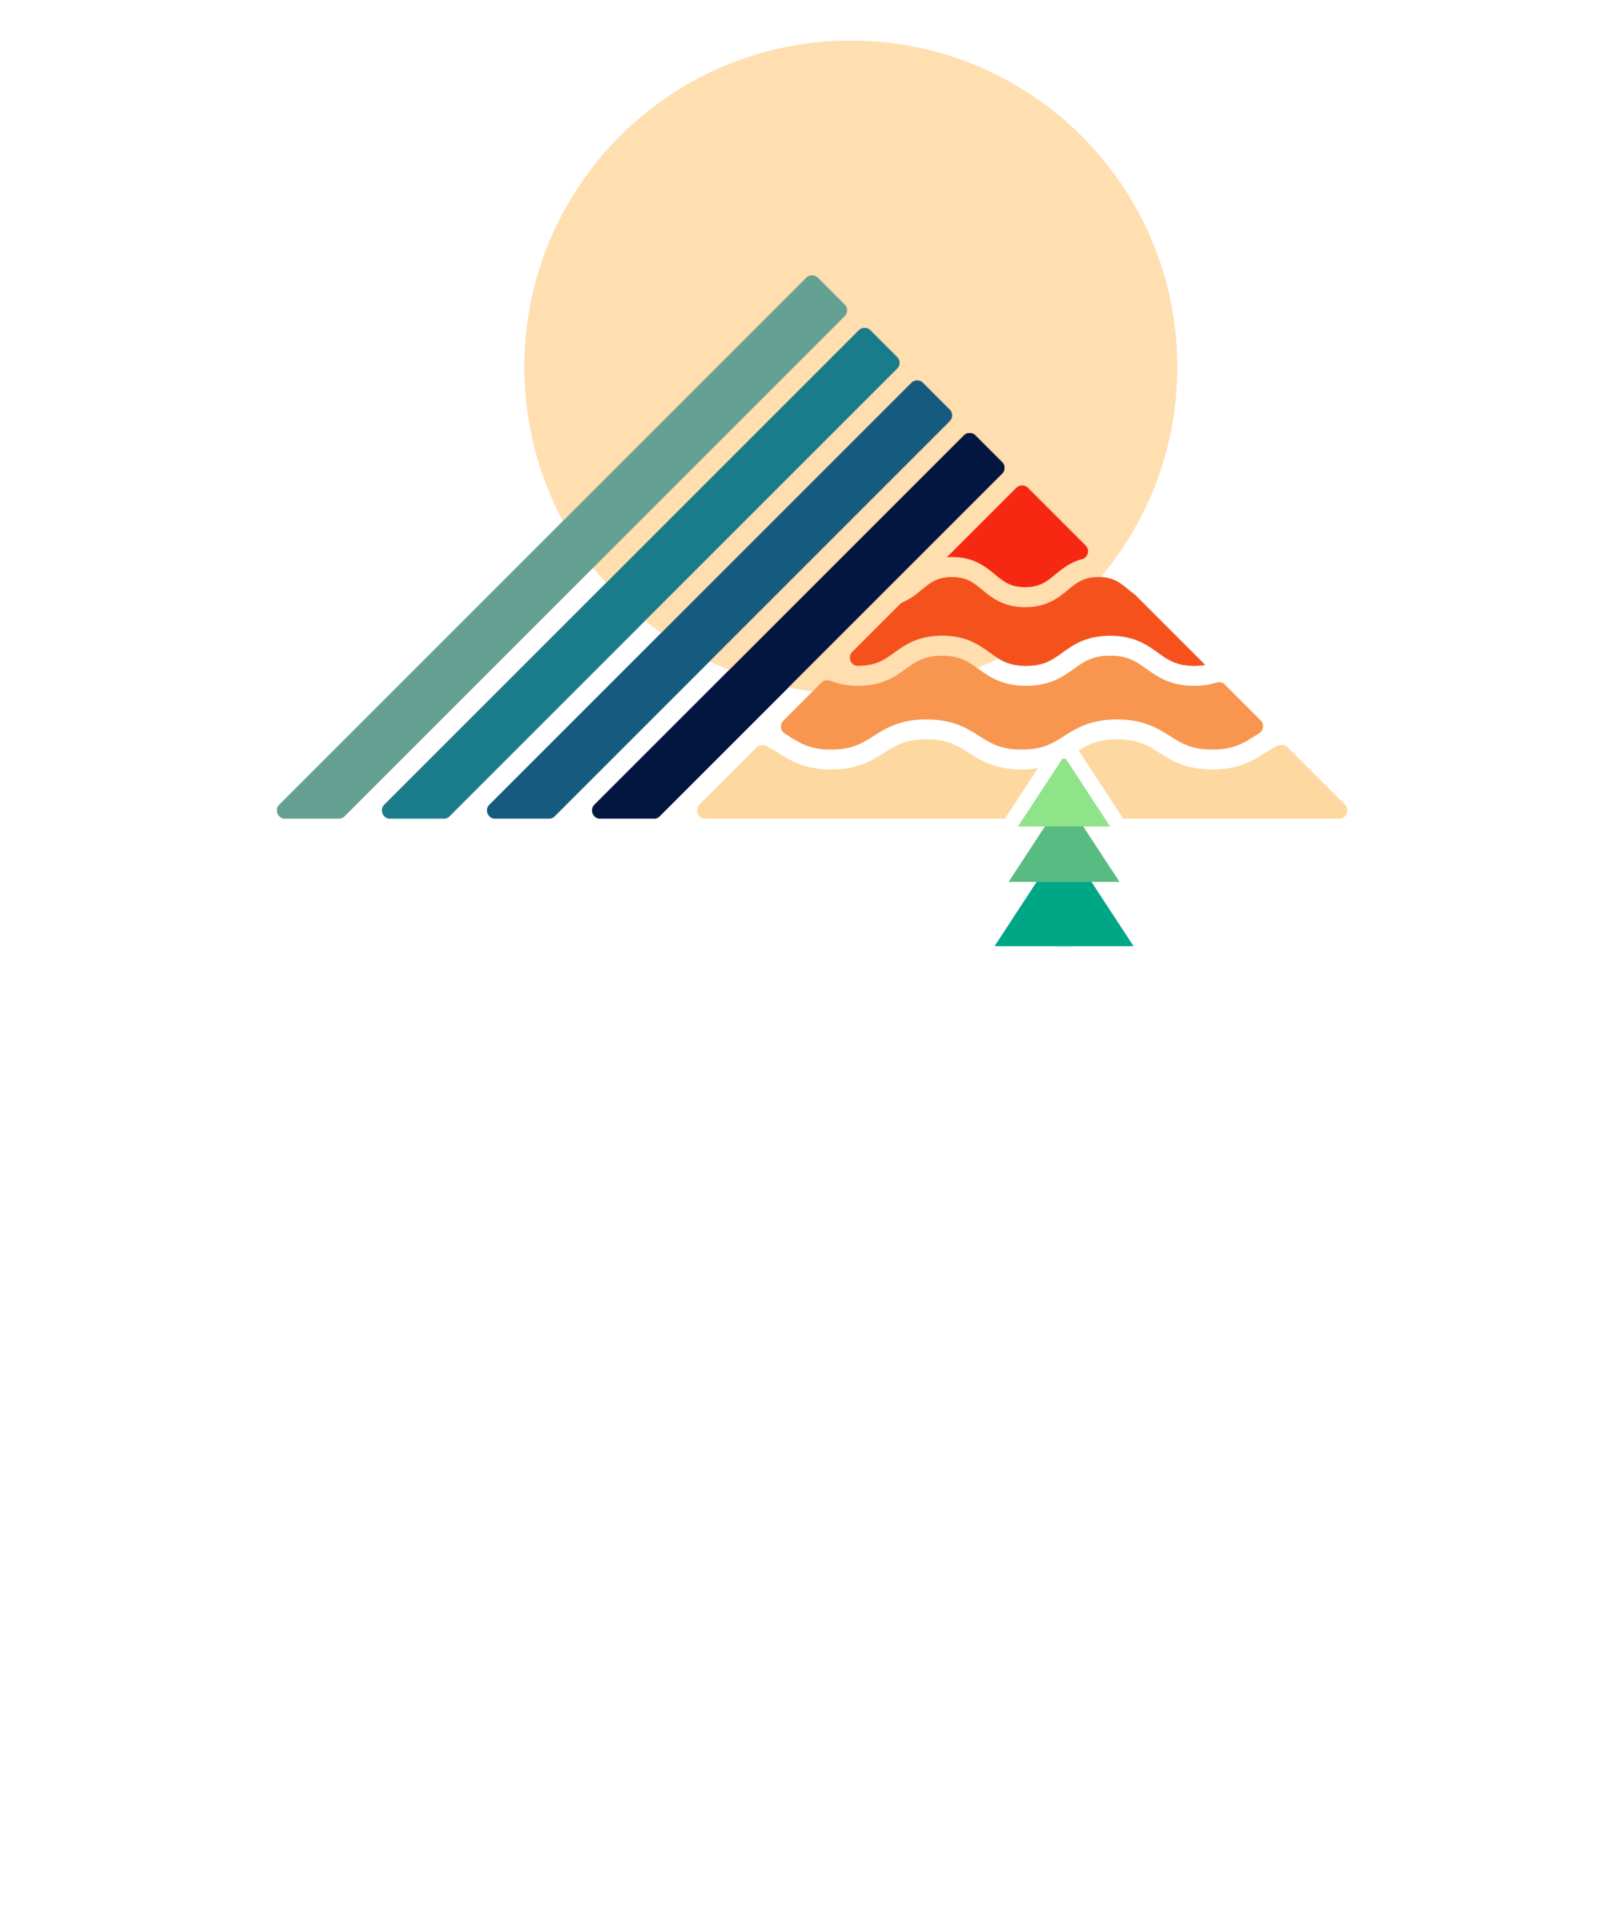 Mobility duo white